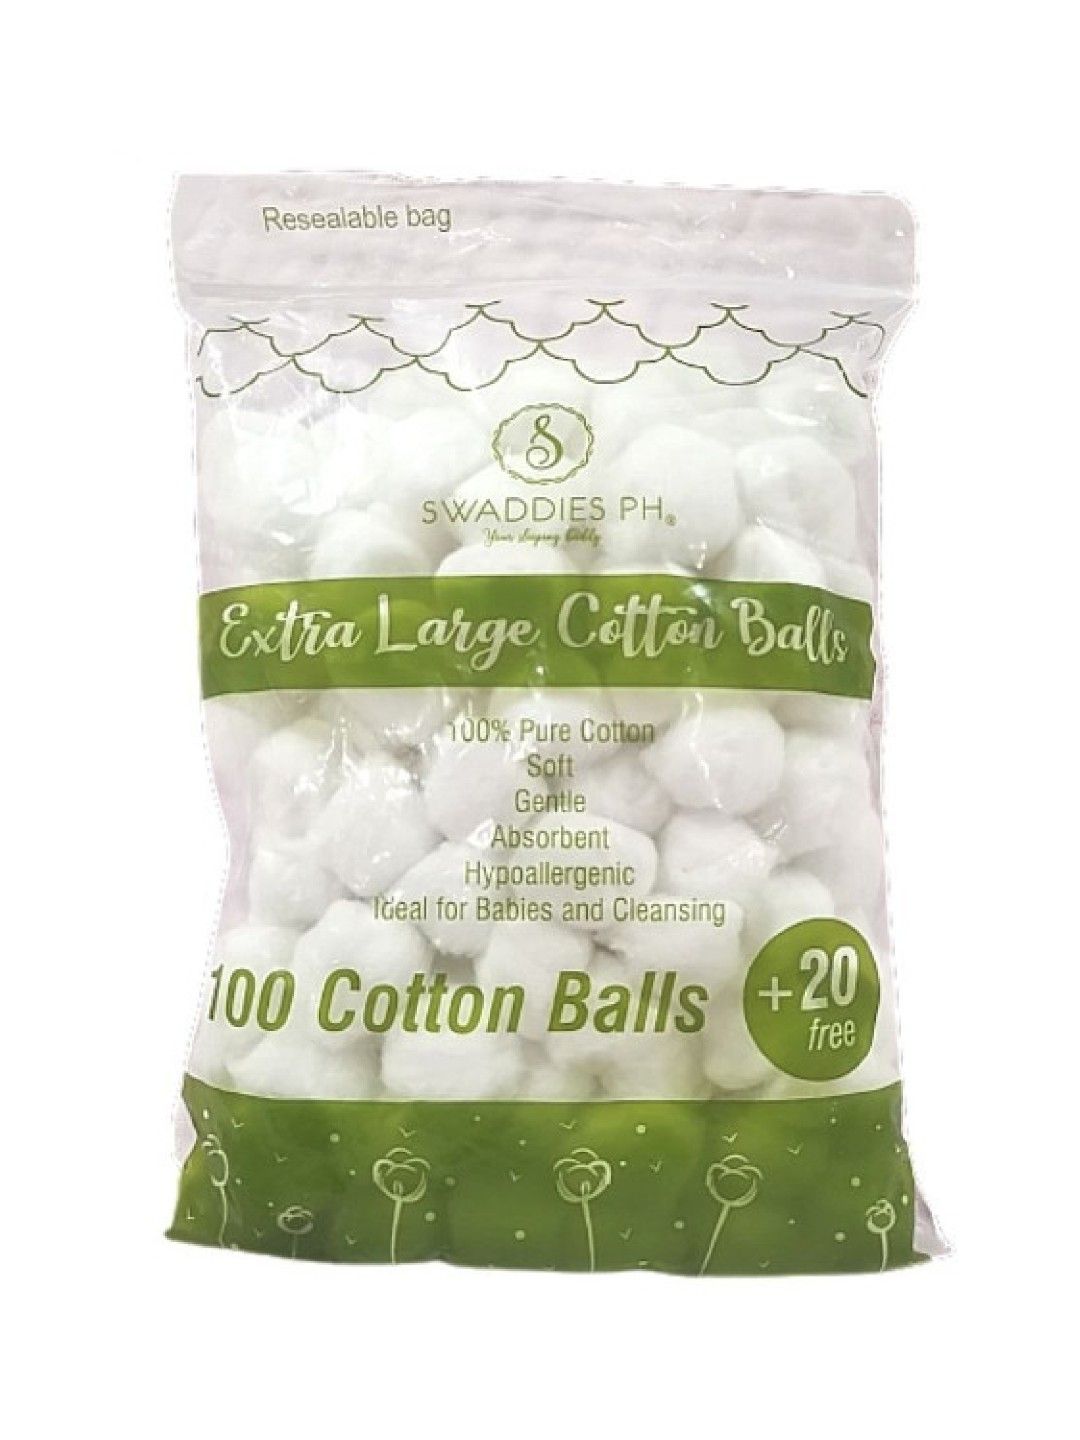 Swaddies PH Extra Large Cotton Balls